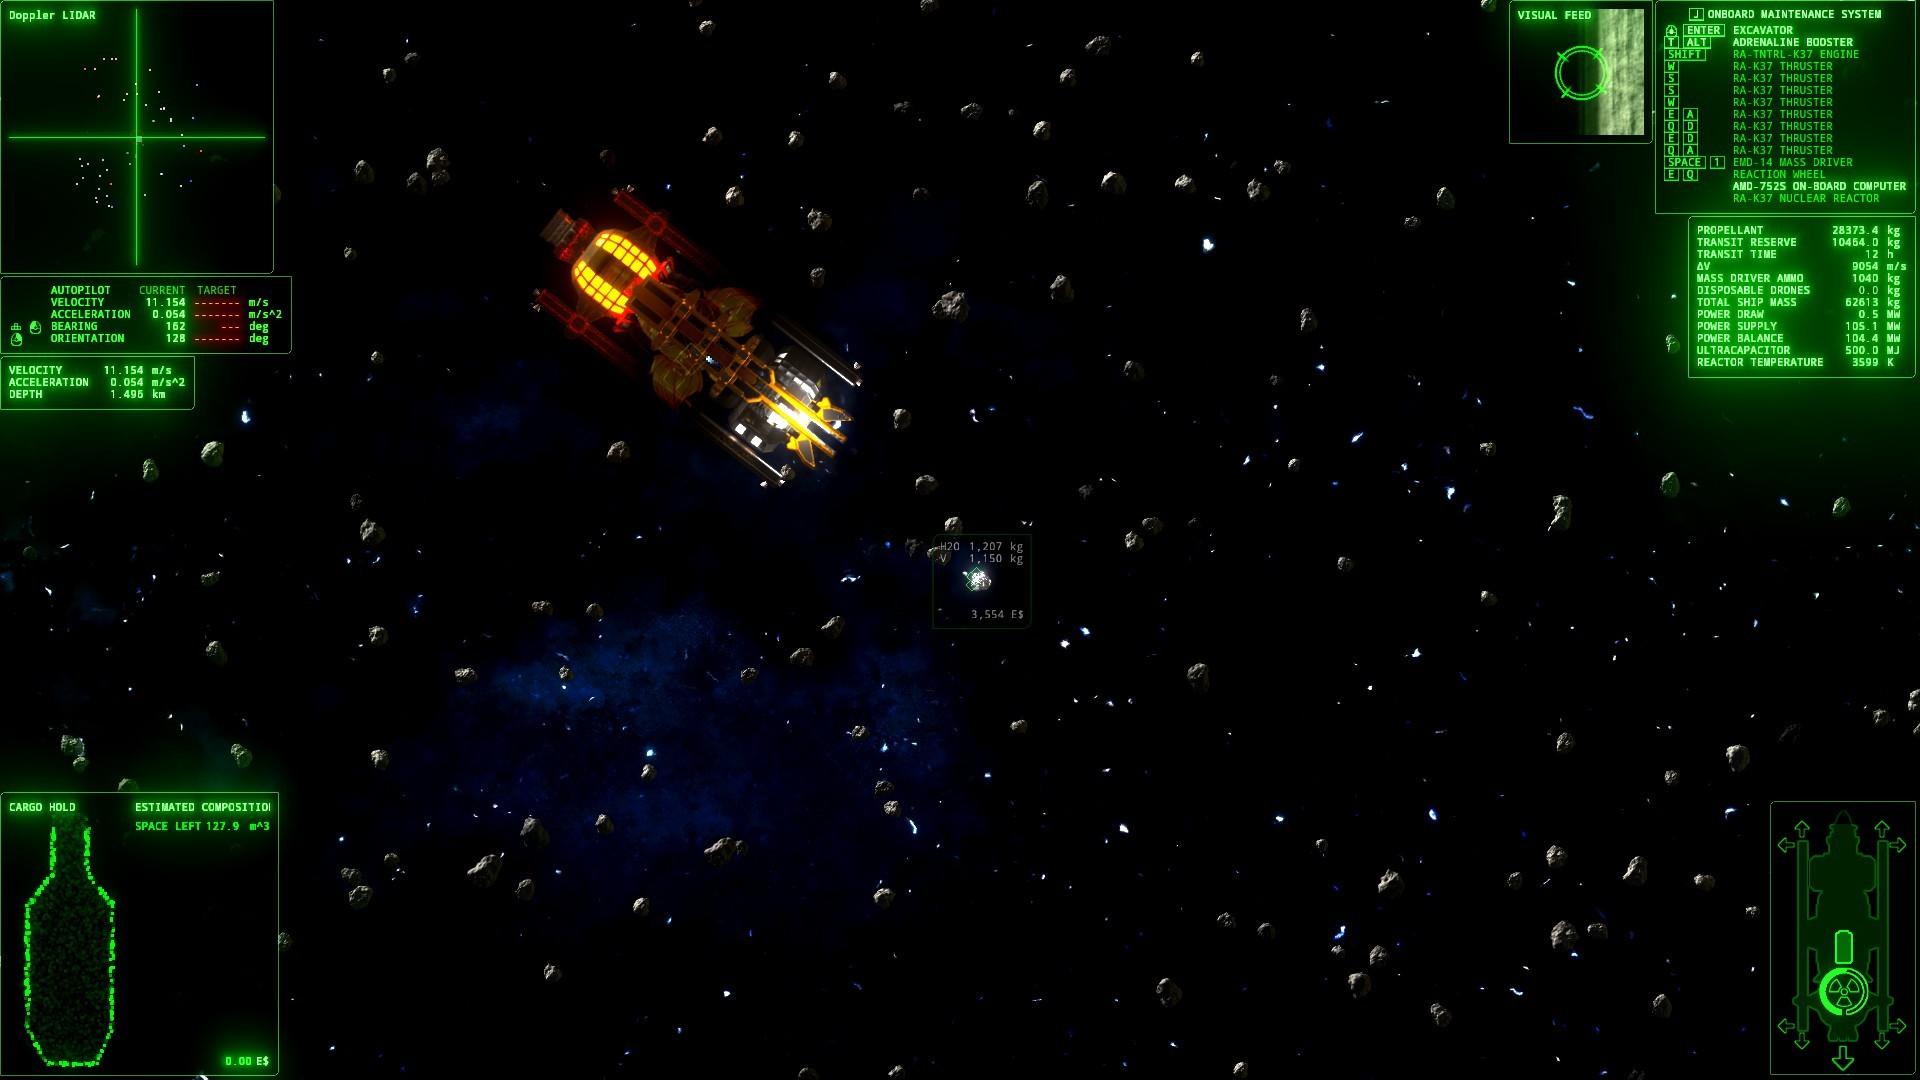 Screenshot №1 from game ΔV: Rings of Saturn